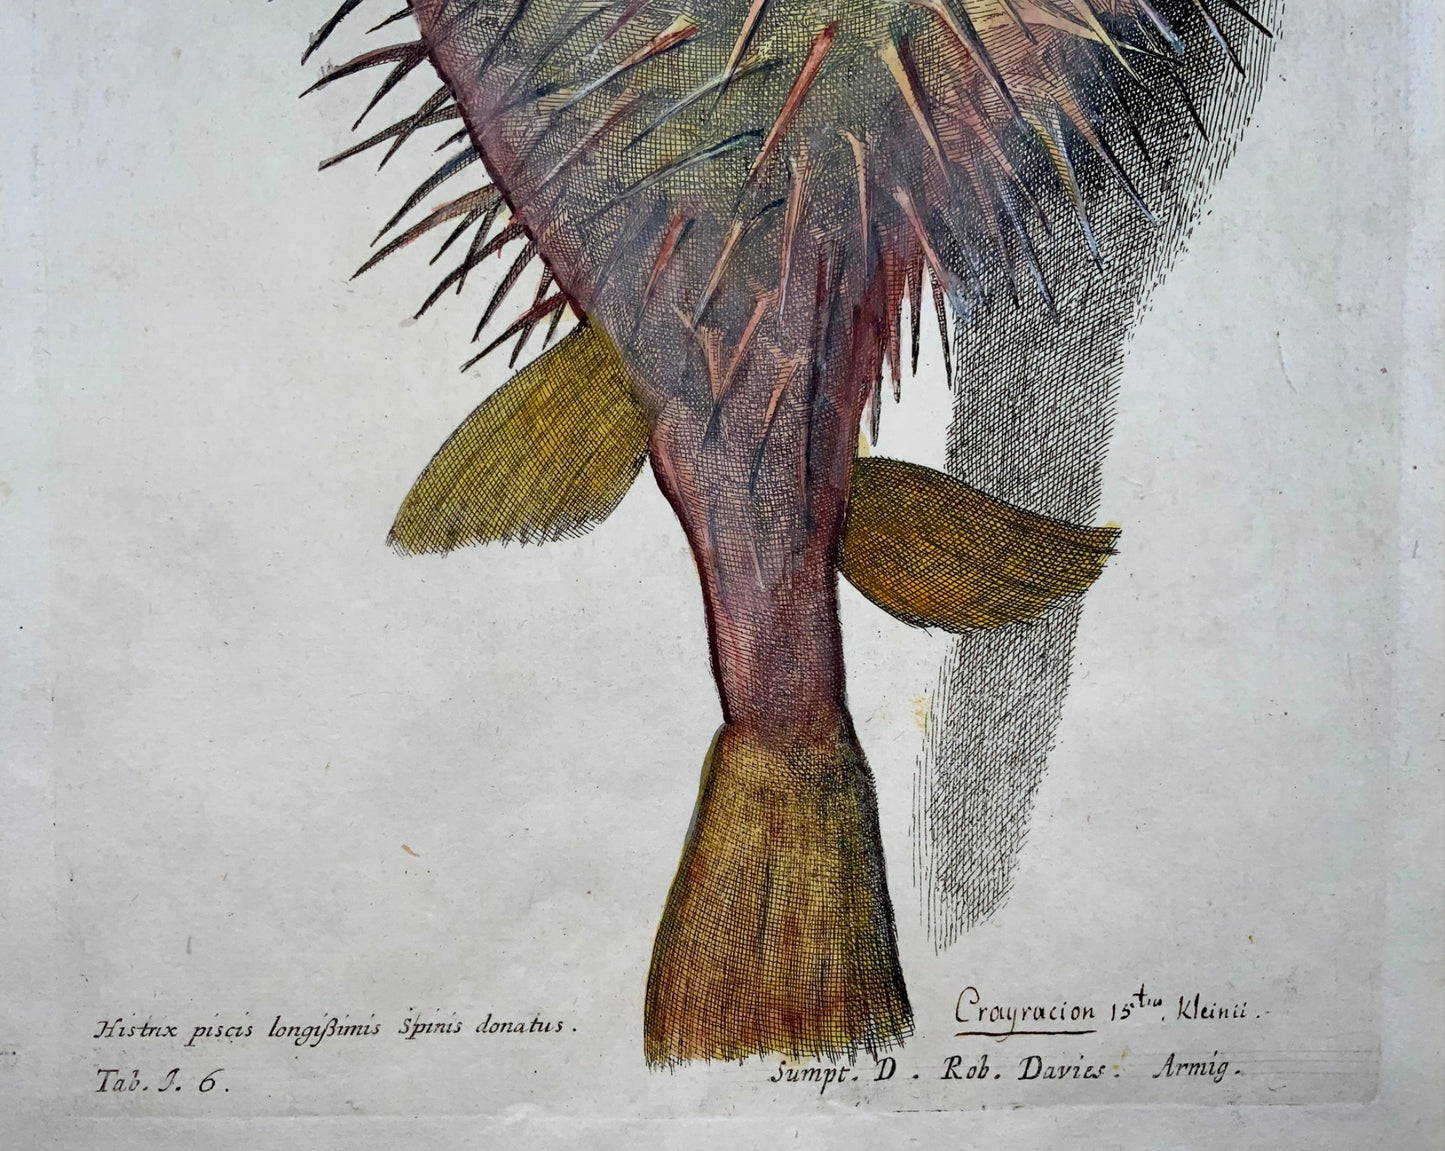 1686 Richard Hunt after Silviani - Porcupine Fish - folio copper engraving